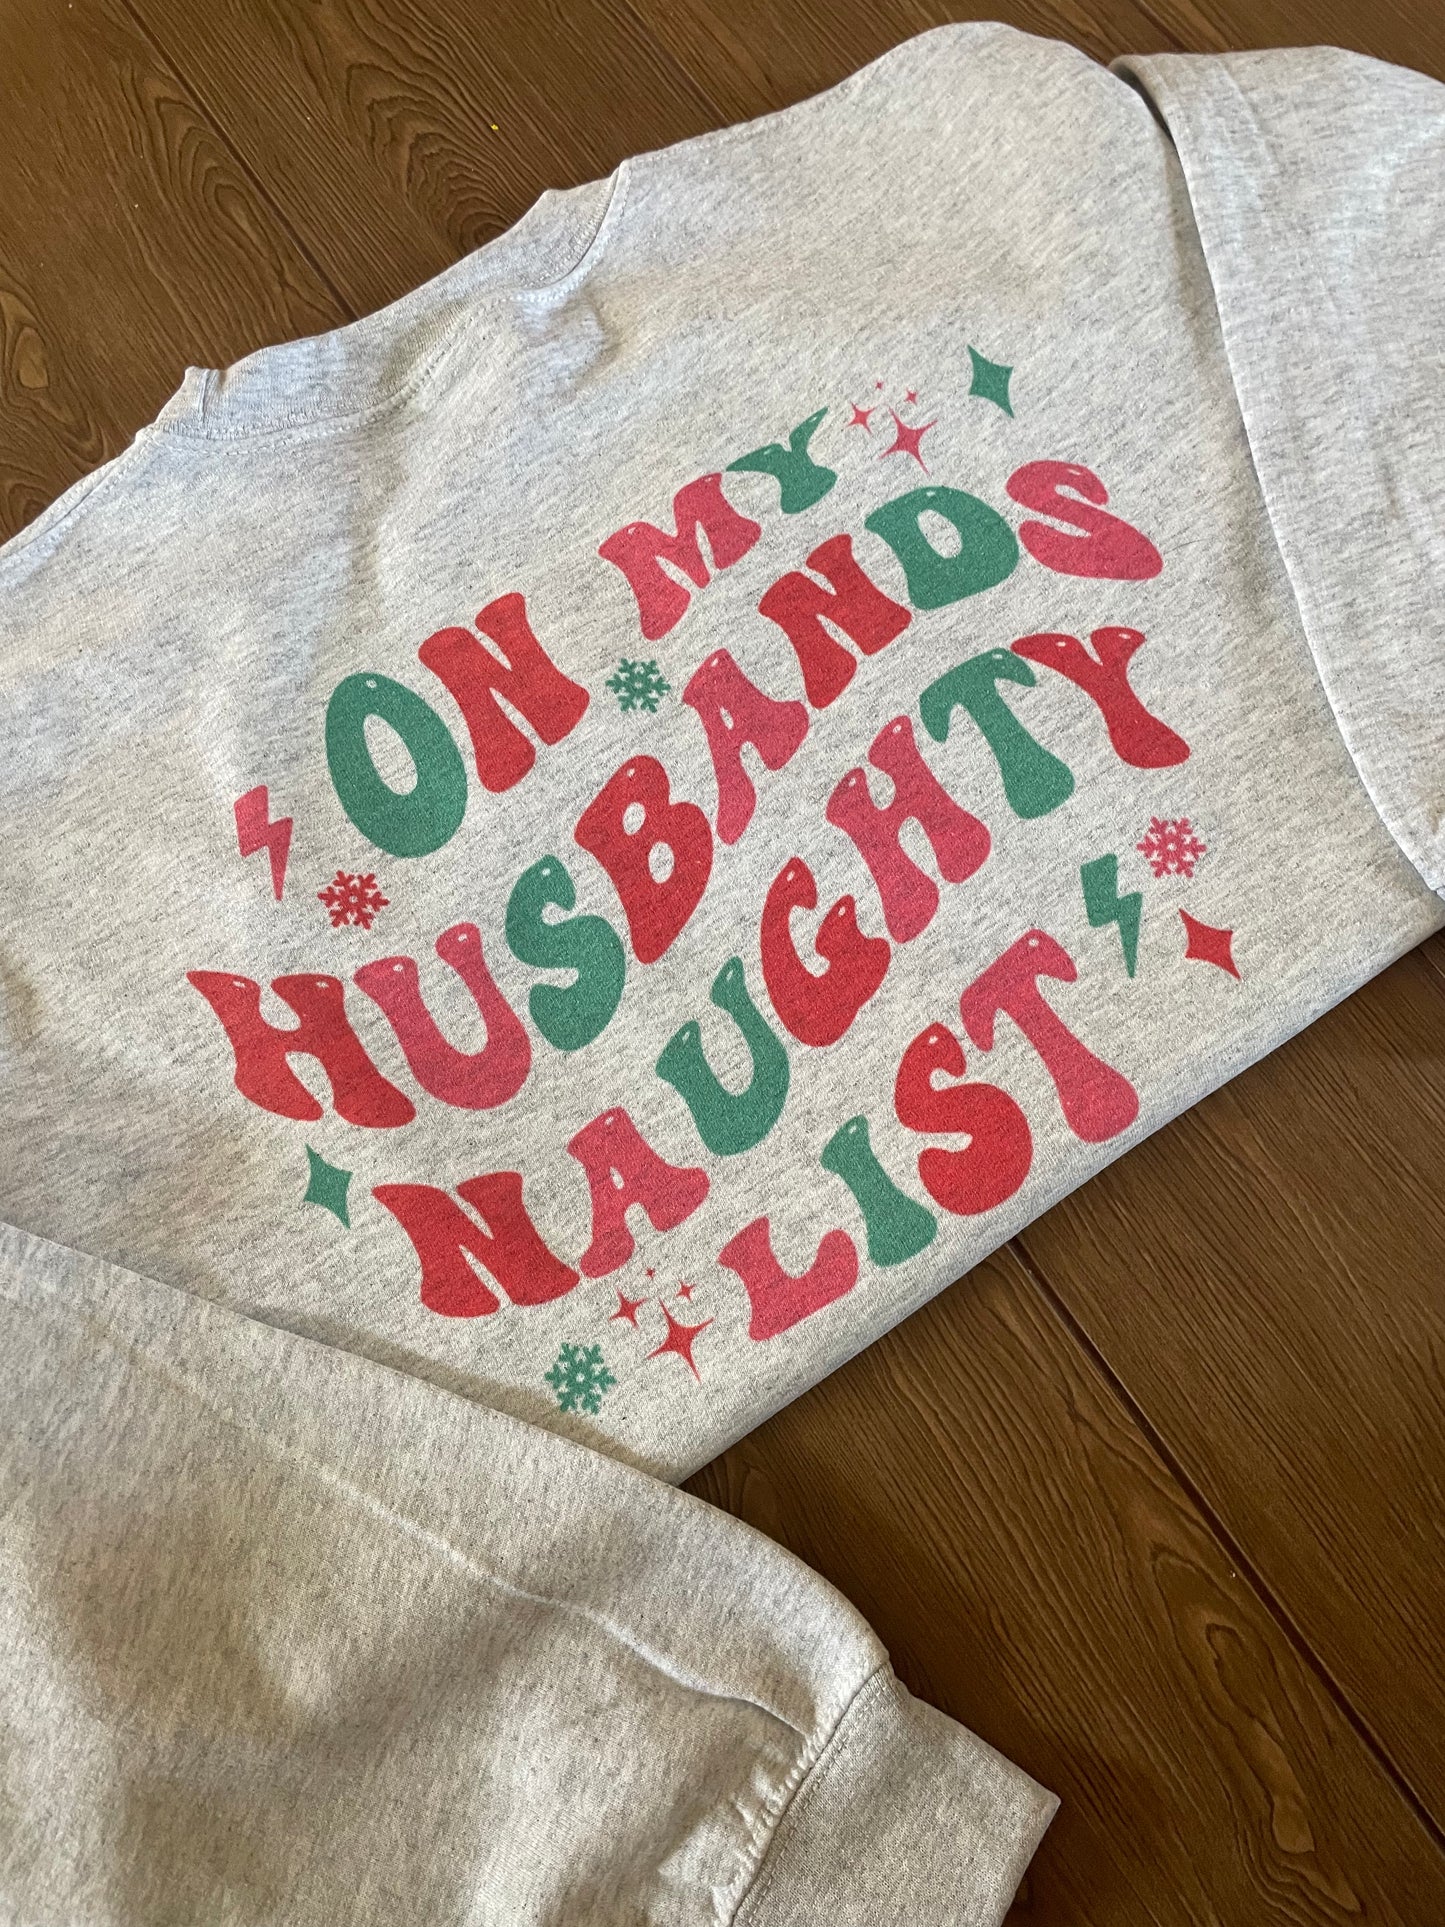 On my husband’s naughty list